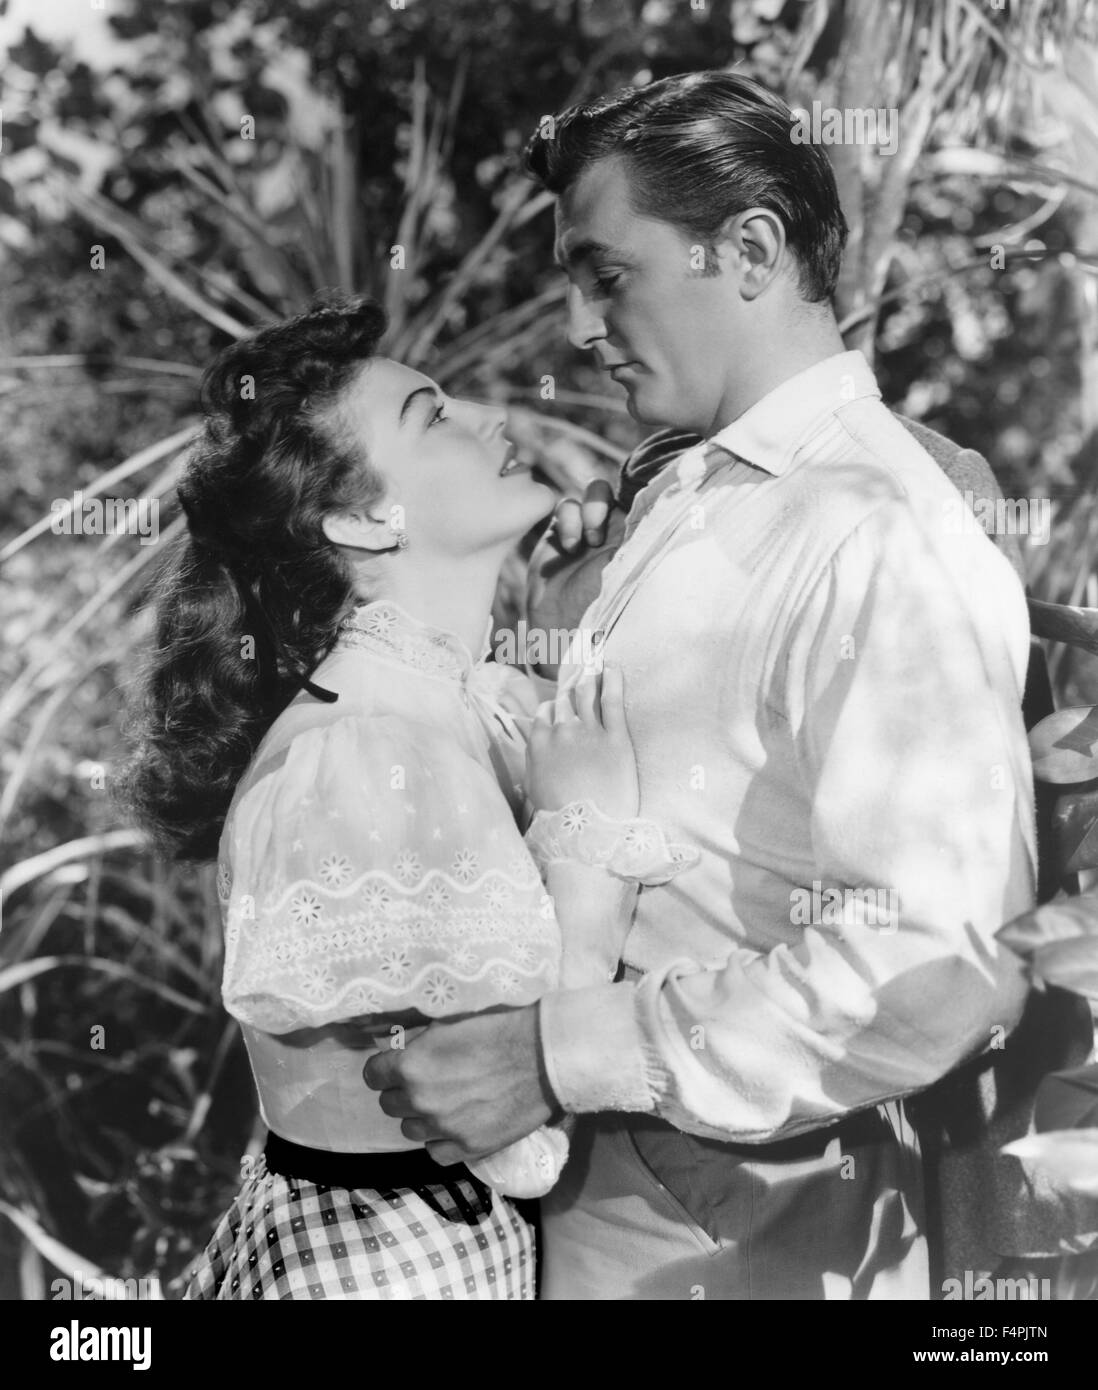 Ava Gardner e Robert Mitchum / Il mio passato proibita / 1951 diretto da Robert Siodmak [R.K.O. Radio Foto] Foto Stock